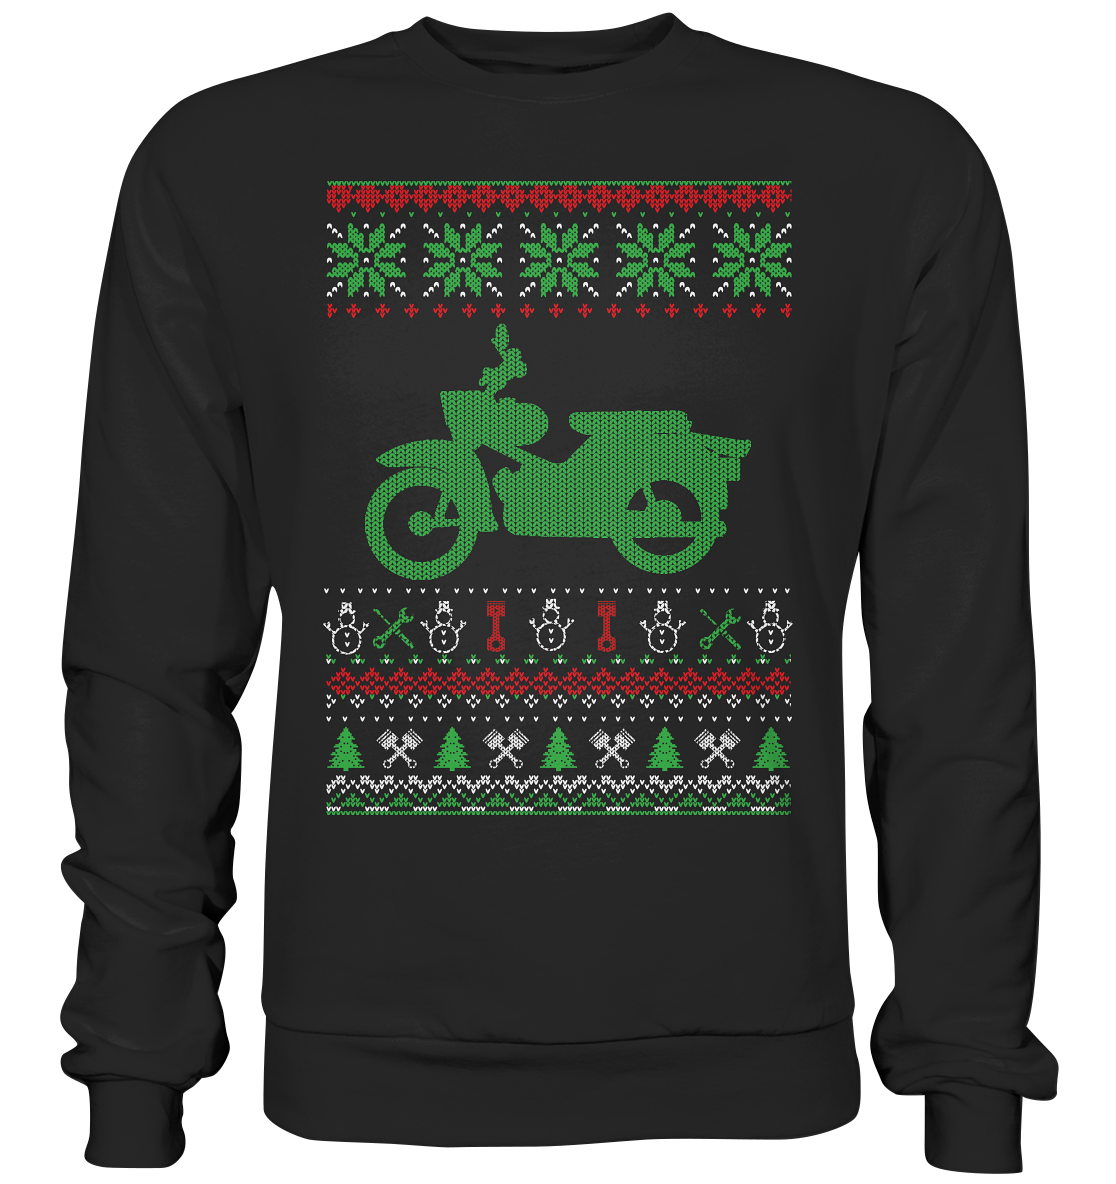 CODUGLY_SGKSTAR - Premium Sweatshirt